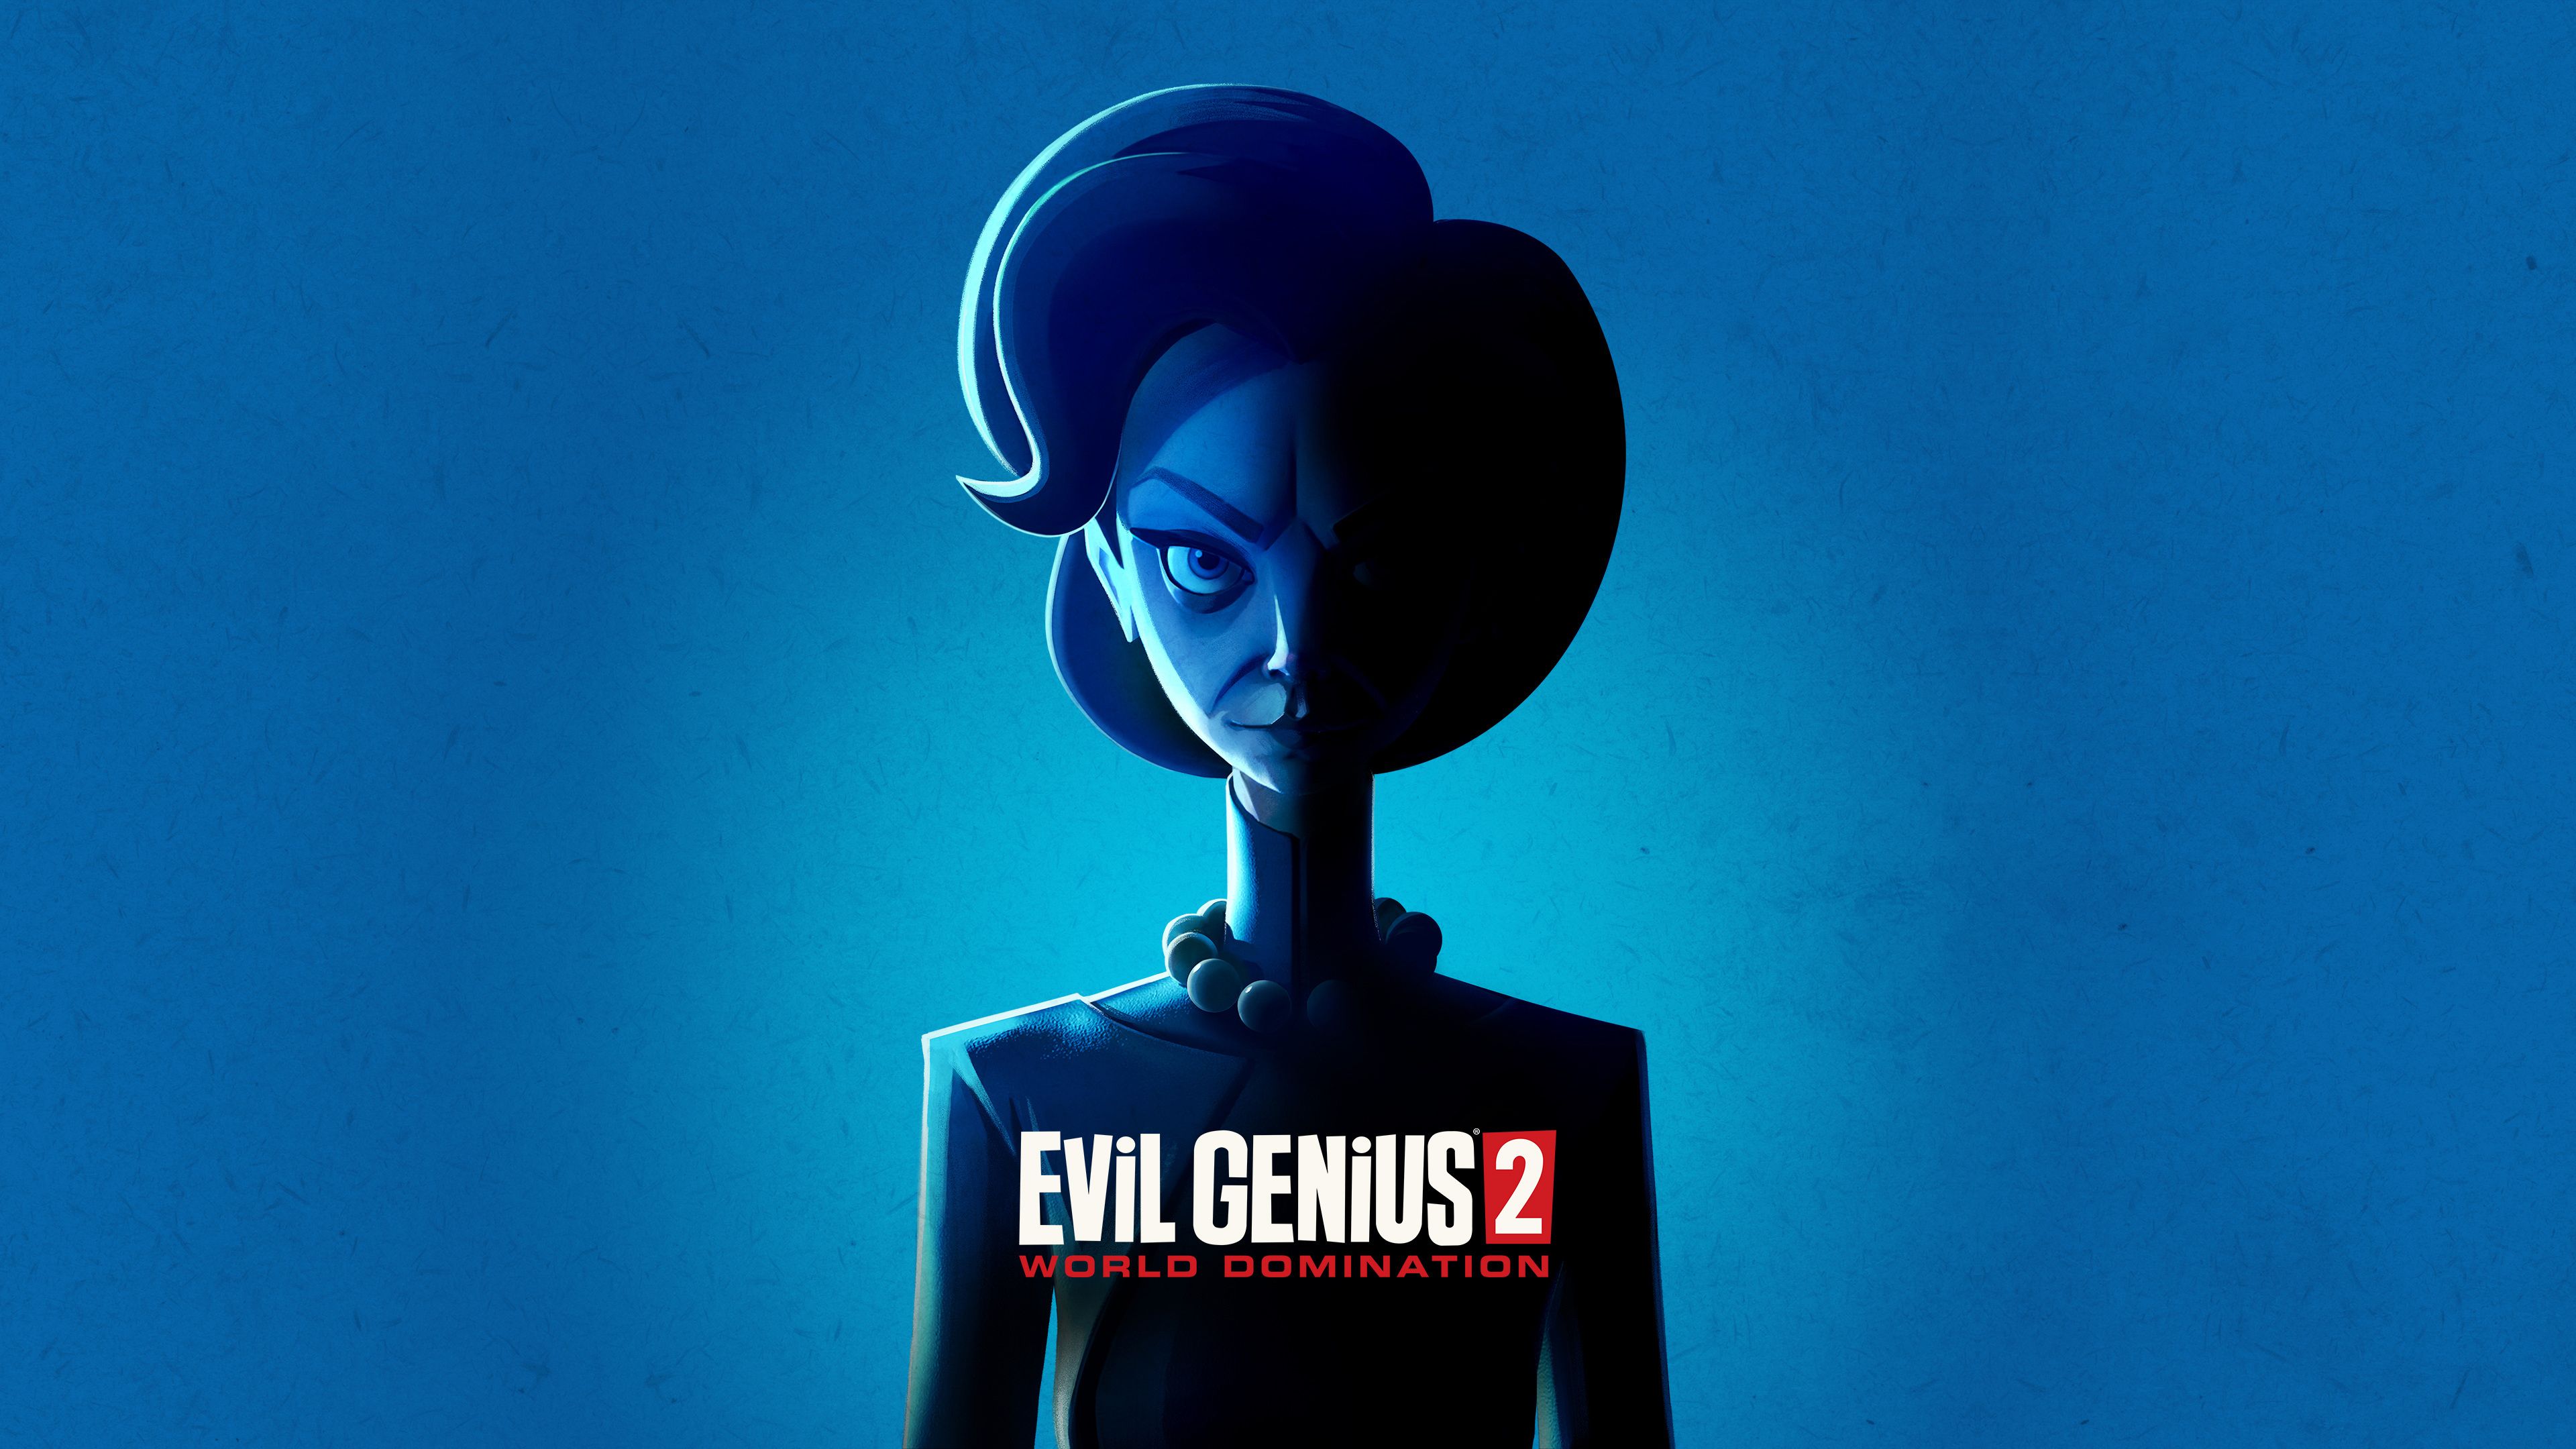 Evil Genius HD Games, 4k Wallpaper, Image, Background